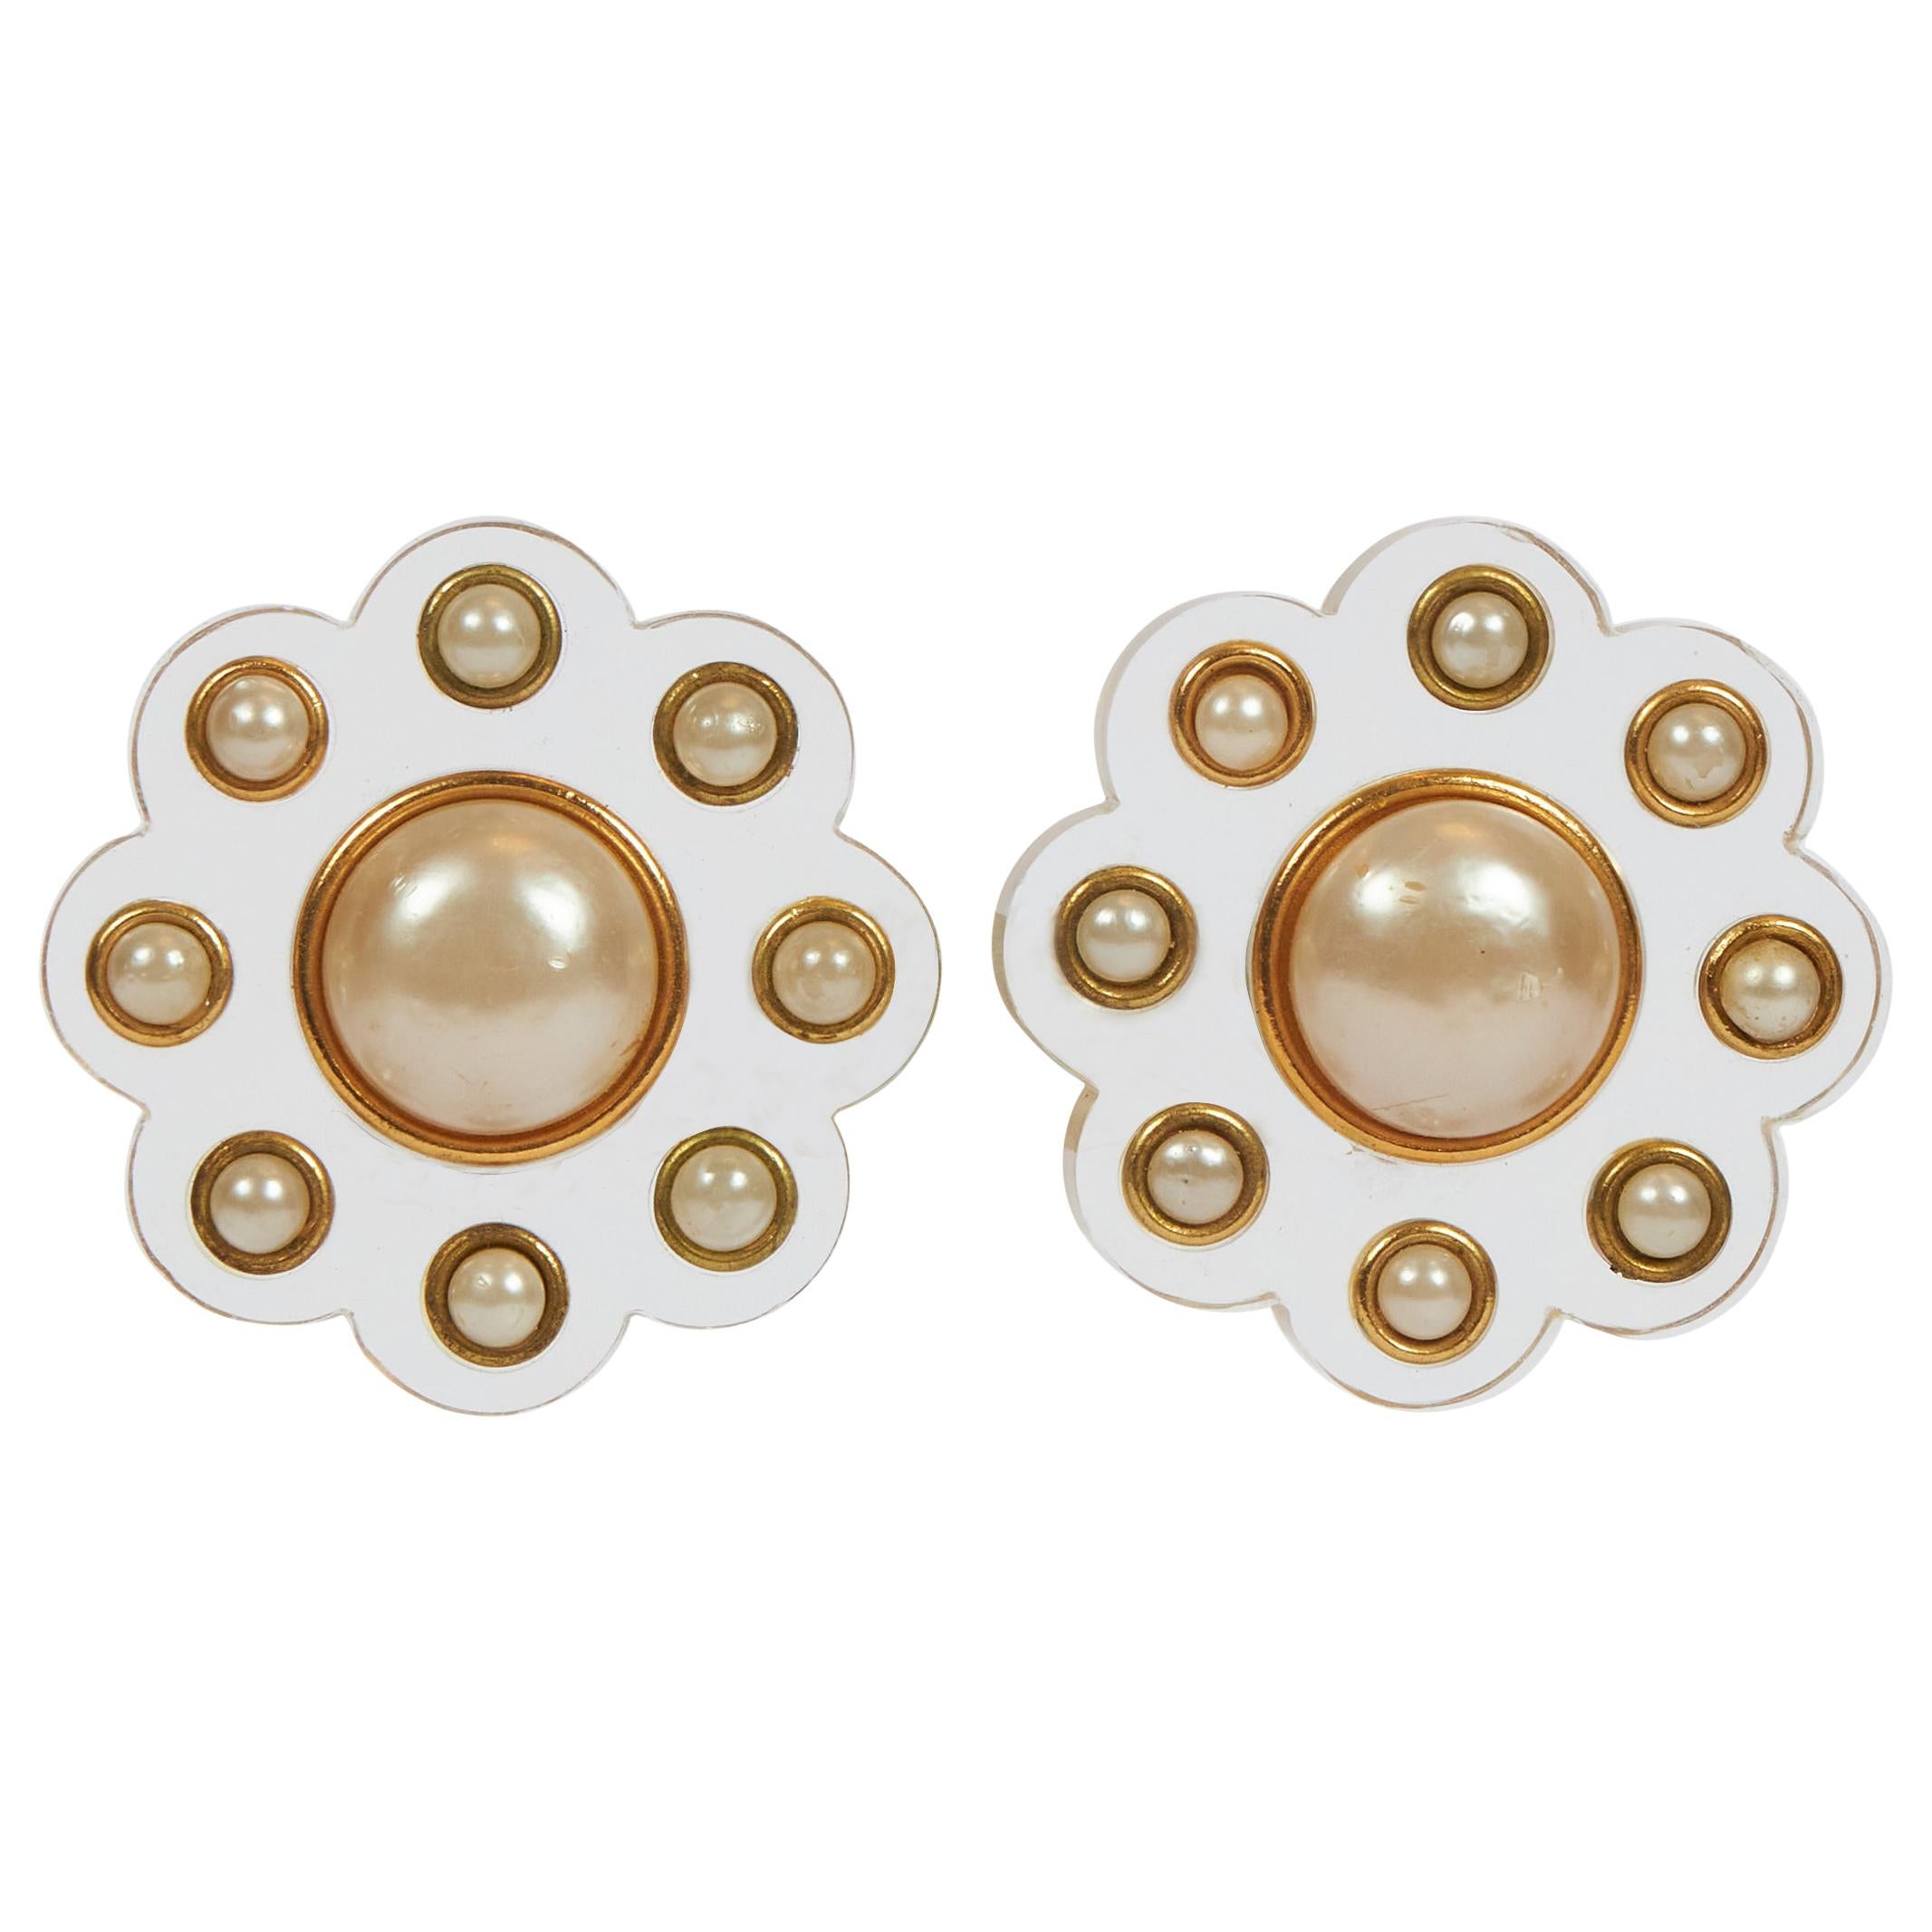 1980's Vintage Chanel Rare Lucite Pearl Flower Earrings